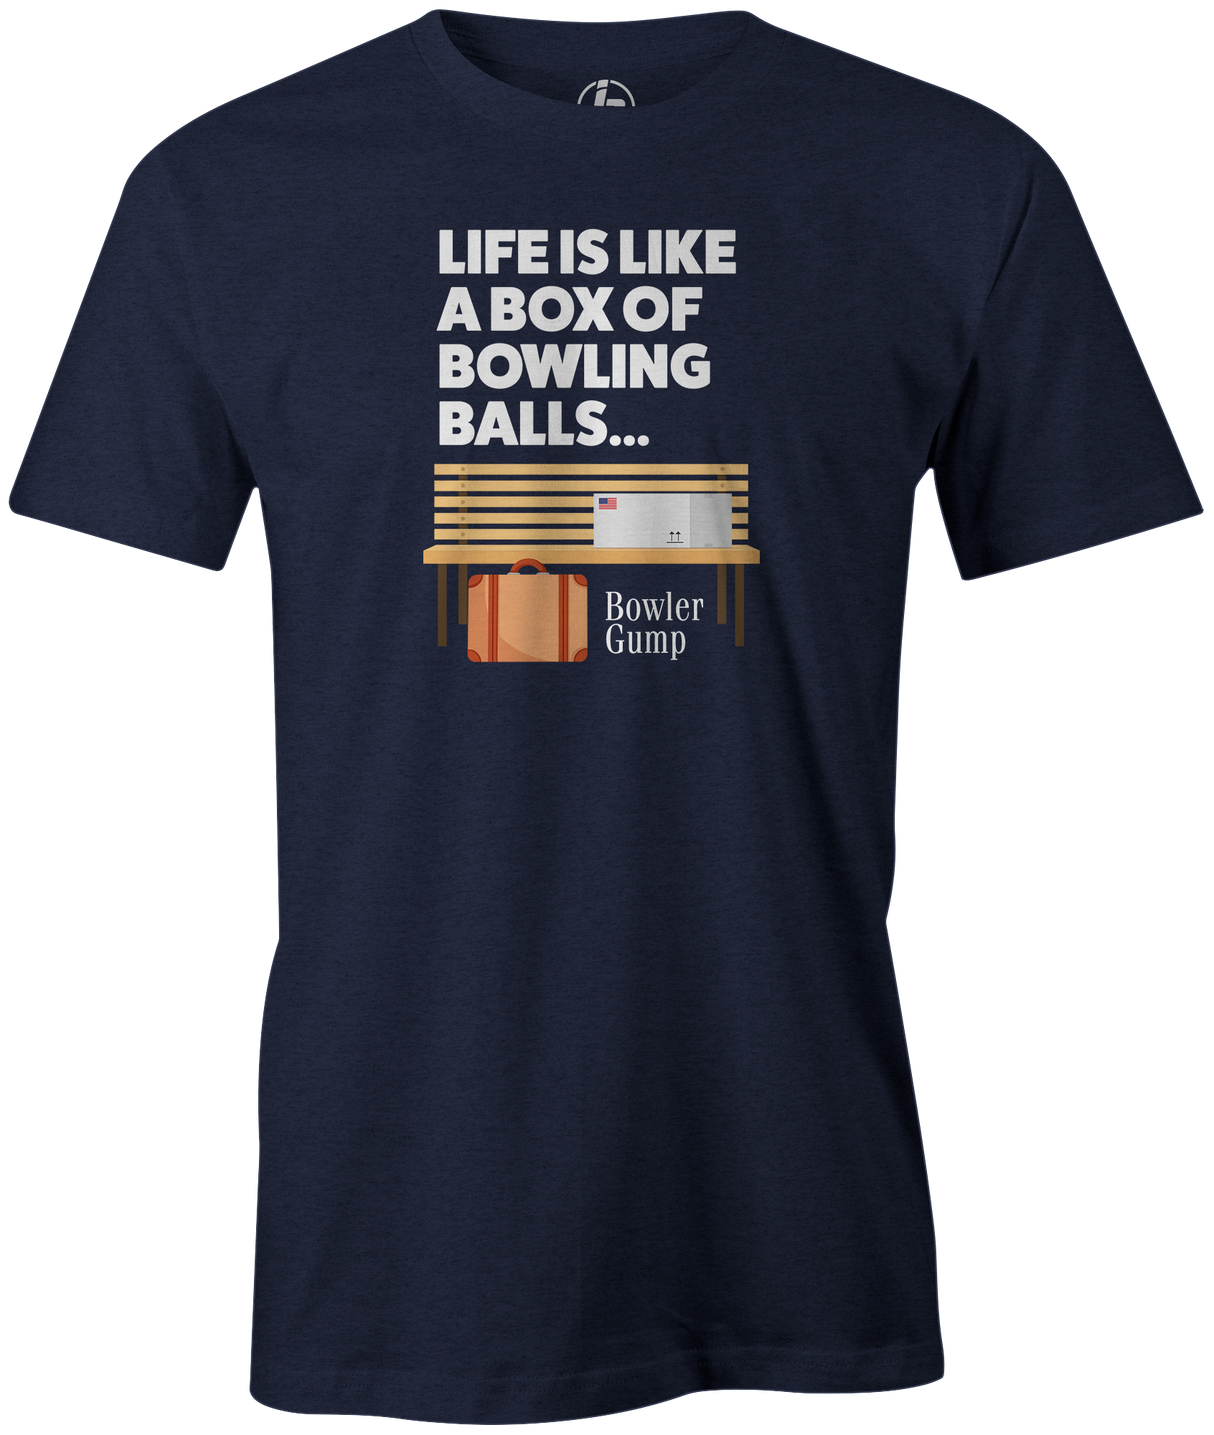 Life is Like a Box Of Bowling Balls Men's t-shirt, navy, bowling, movie, tom hanks, forreest gump, league bowling team shirt, tournament shirt, funny, cool, novelty, vintage, classic. tee, t-shirt, tee shirt, tee-shirt, tees, apparel, merch.